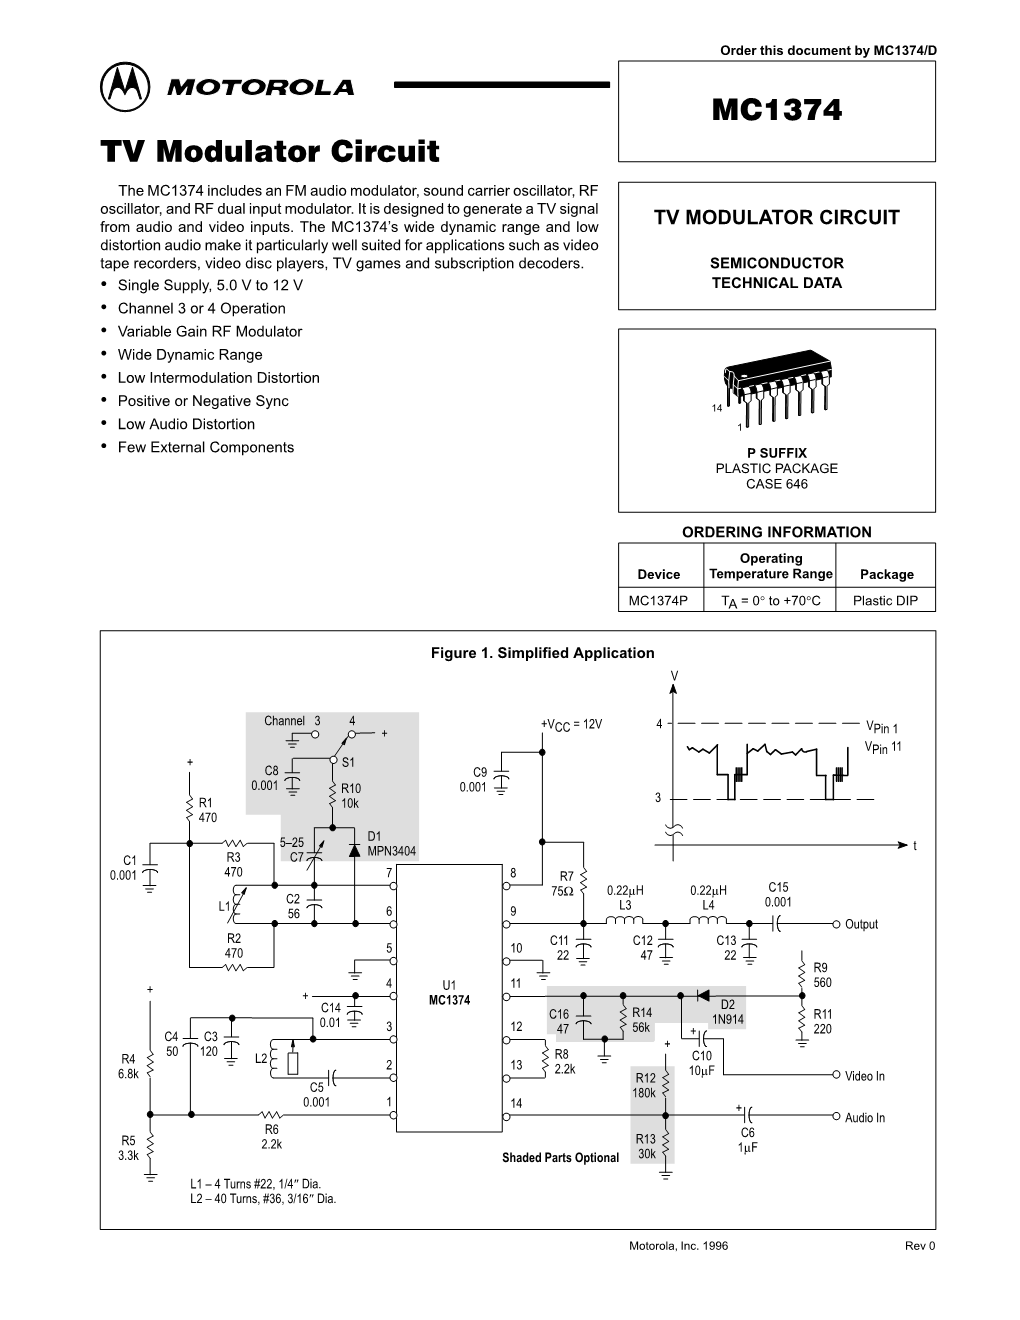 MC1374 TV Modulator Circuit